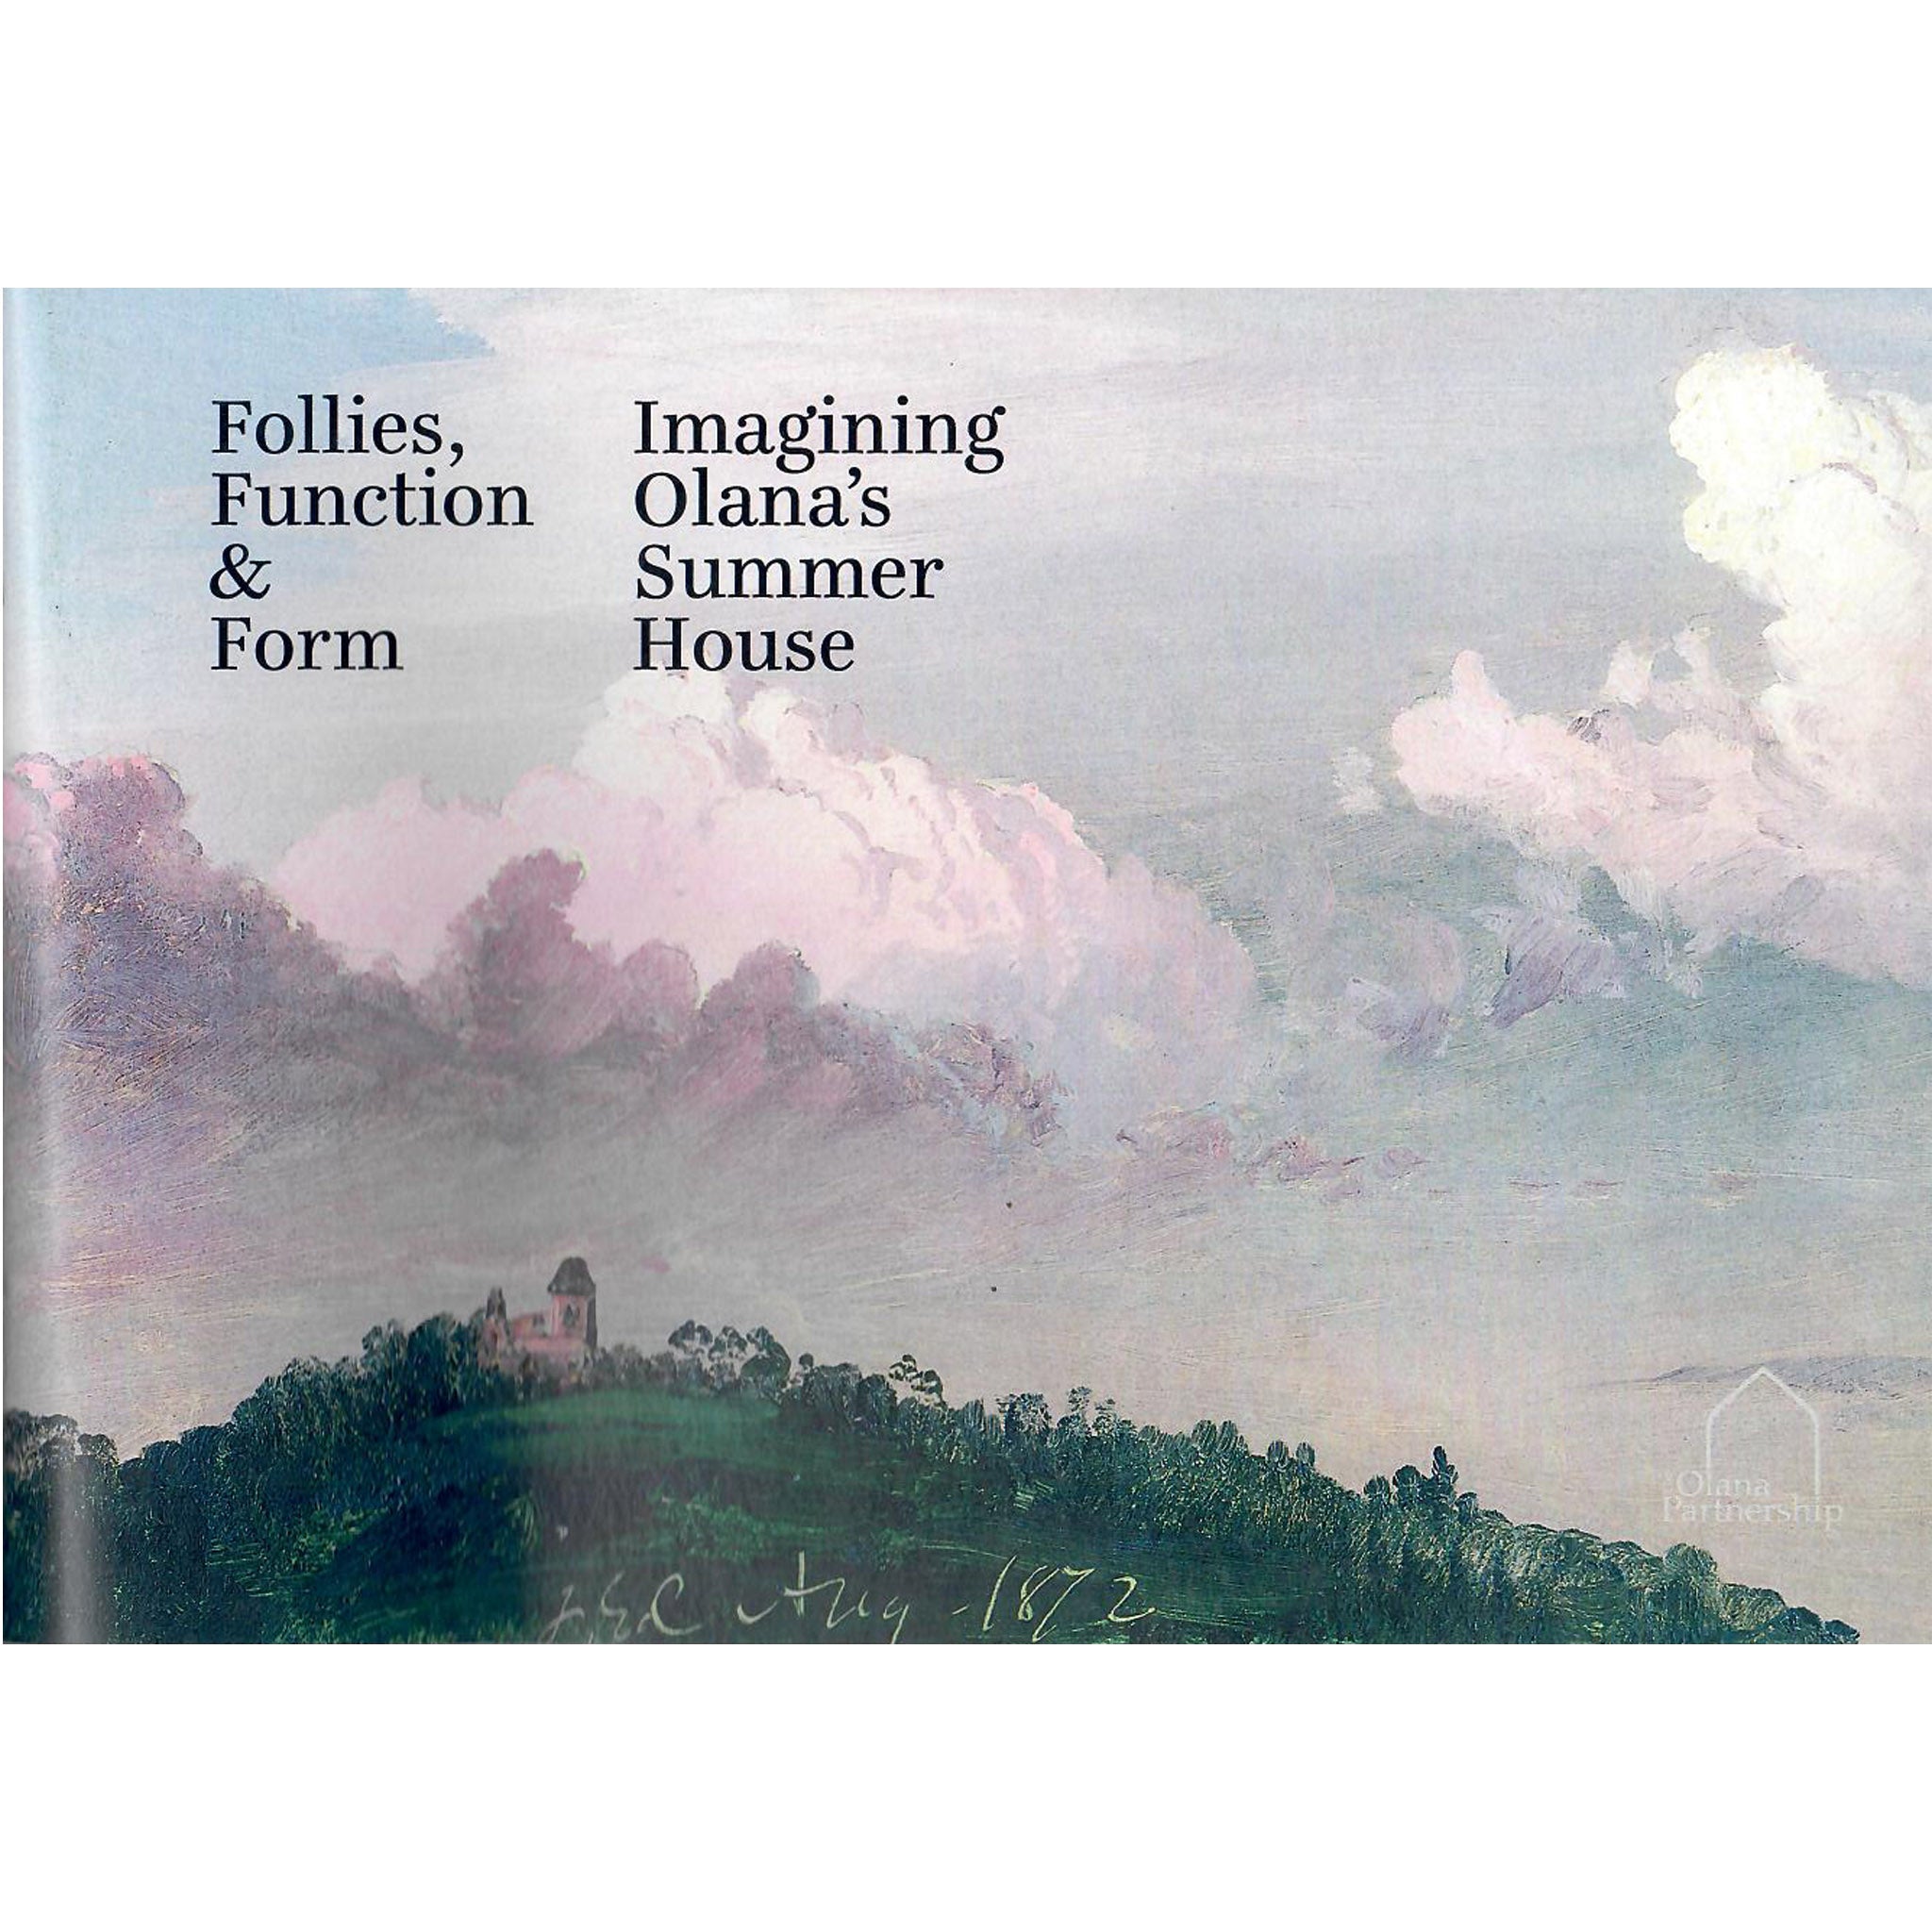 Follies, Function & Form: Imagining Olana's Summer House